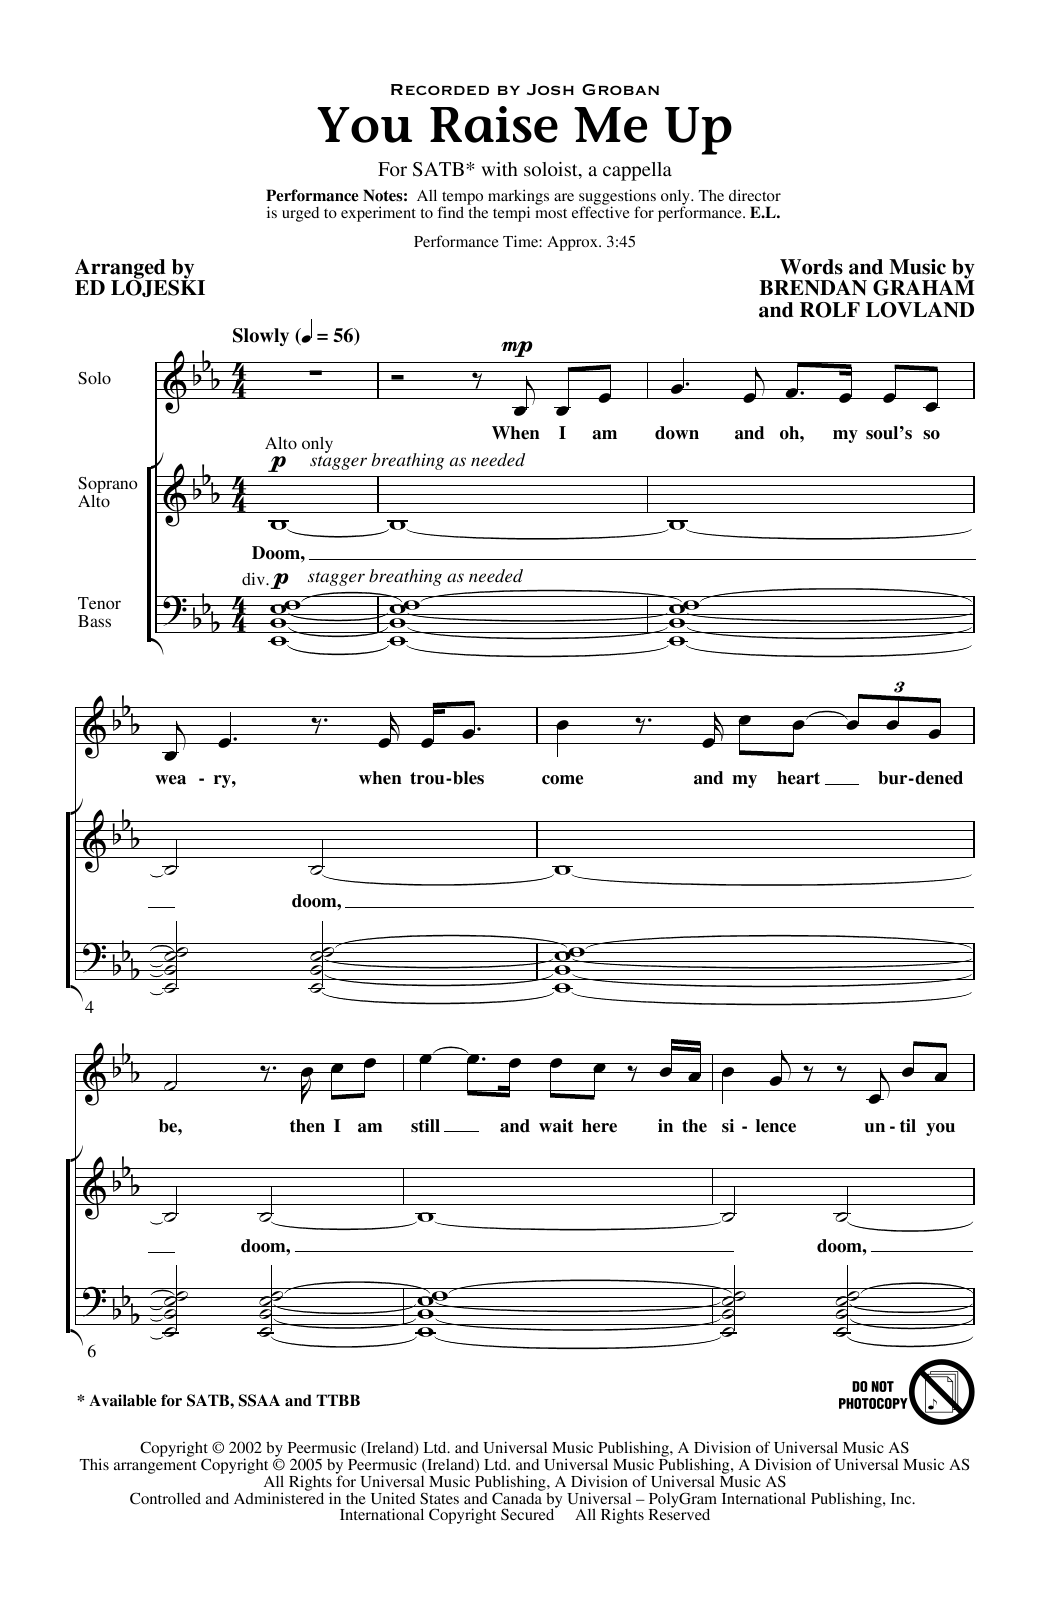 Josh Groban You Raise Me Up (arr. Ed Lojeski) Sheet Music Notes & Chords for TTBB Choir - Download or Print PDF